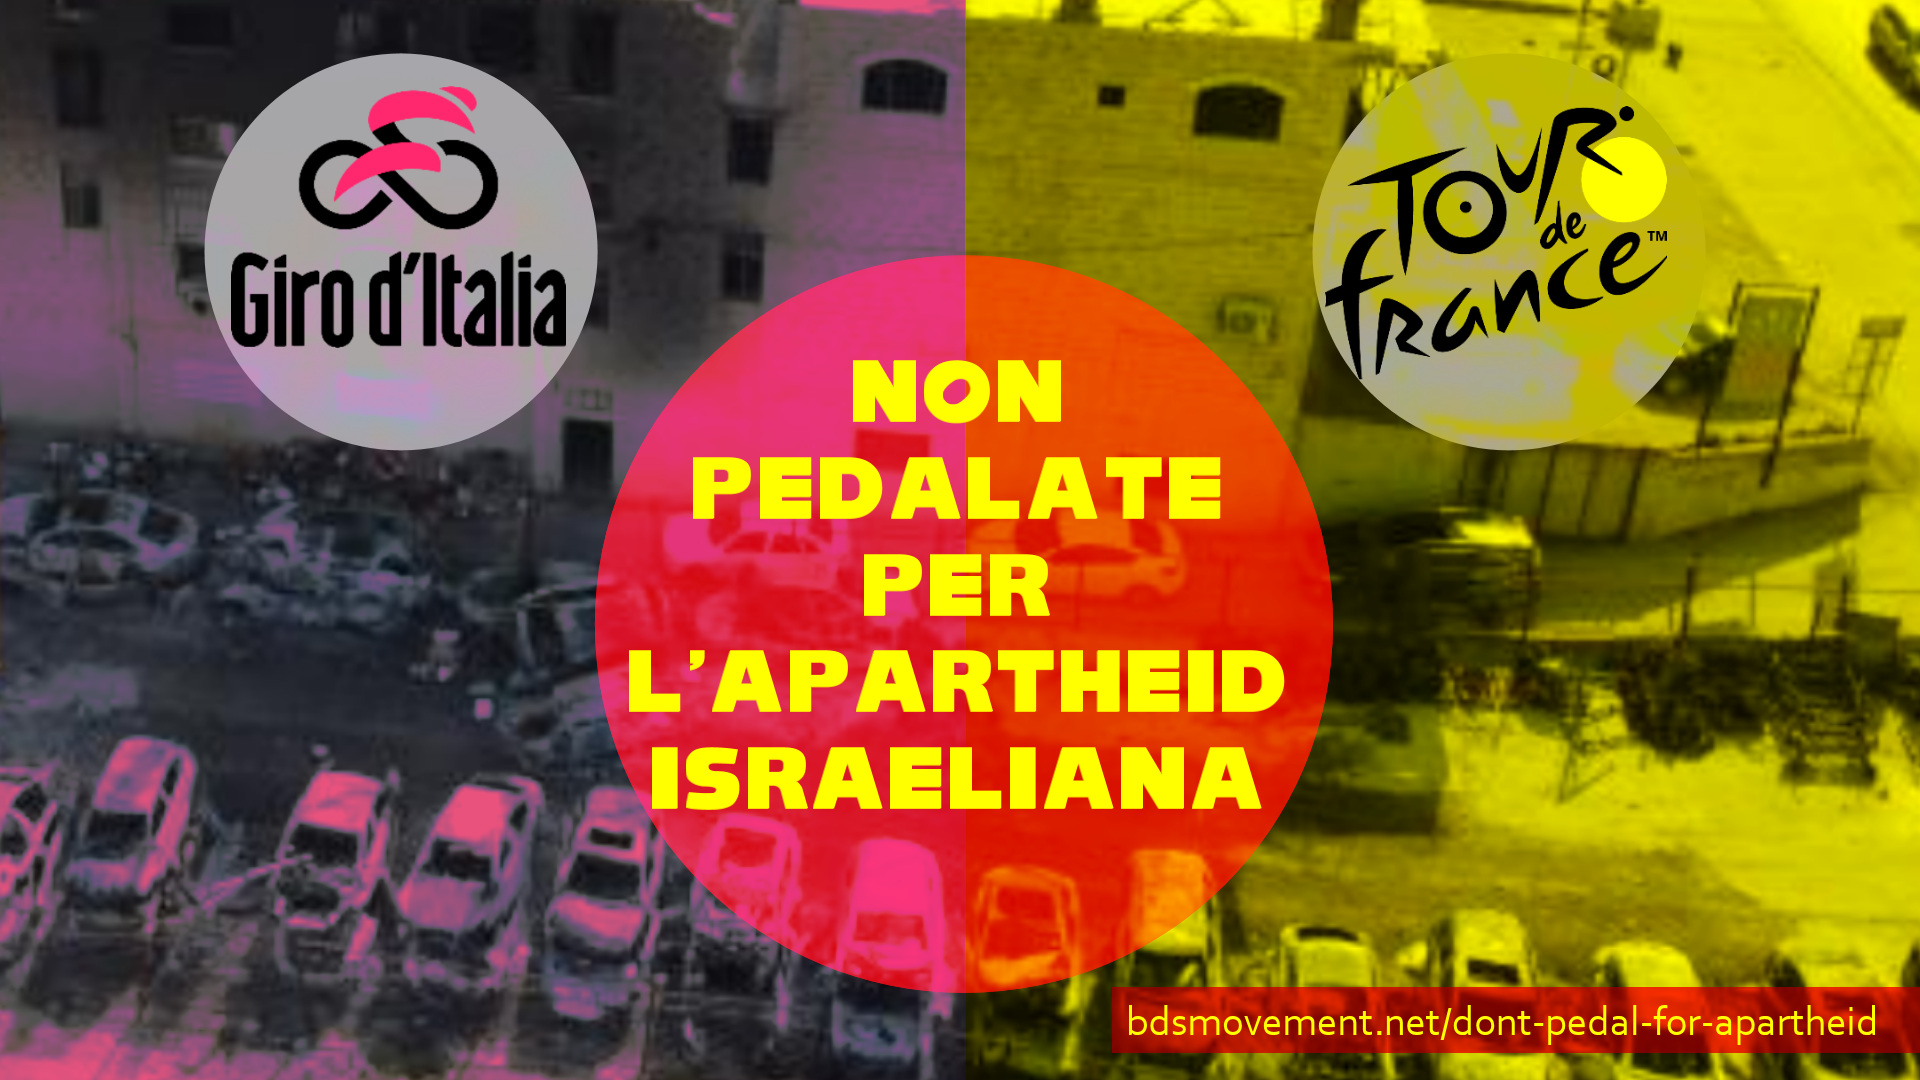 Giro d'Italia e Tour de France, non pedalate per l'apartheid israeliana